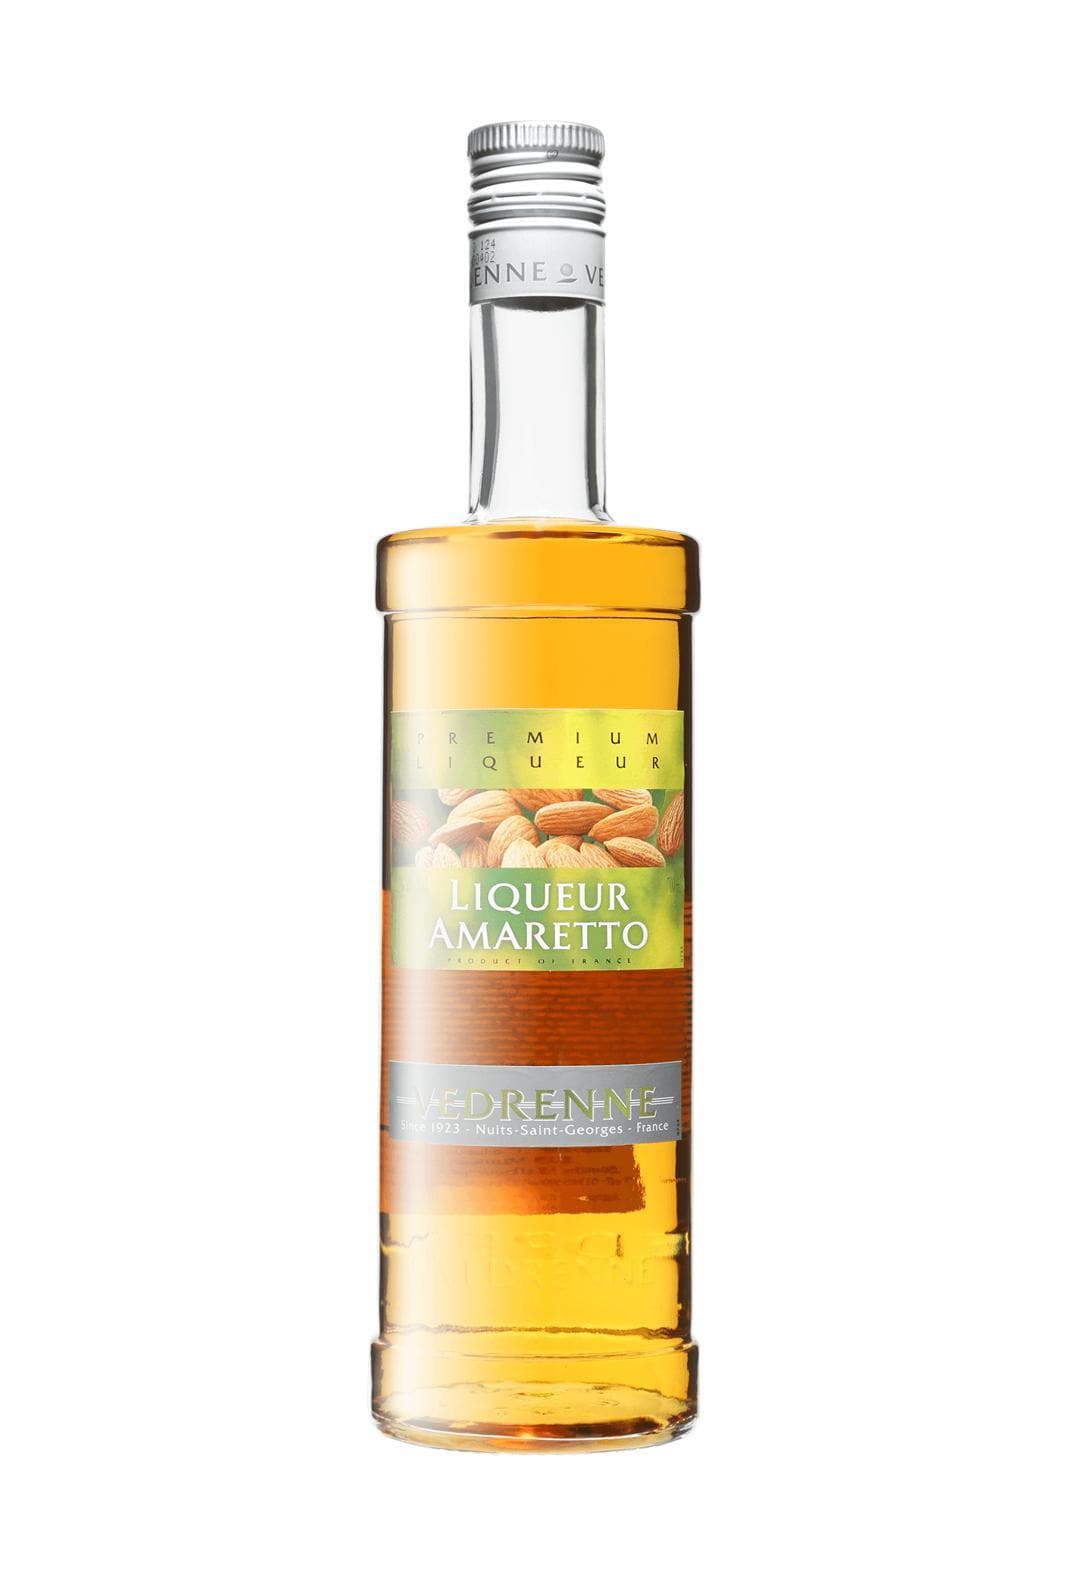 Vedrenne Liqueur Amaretto (Almond) 25% 700ml | Liqueurs | Shop online at Spirits of France